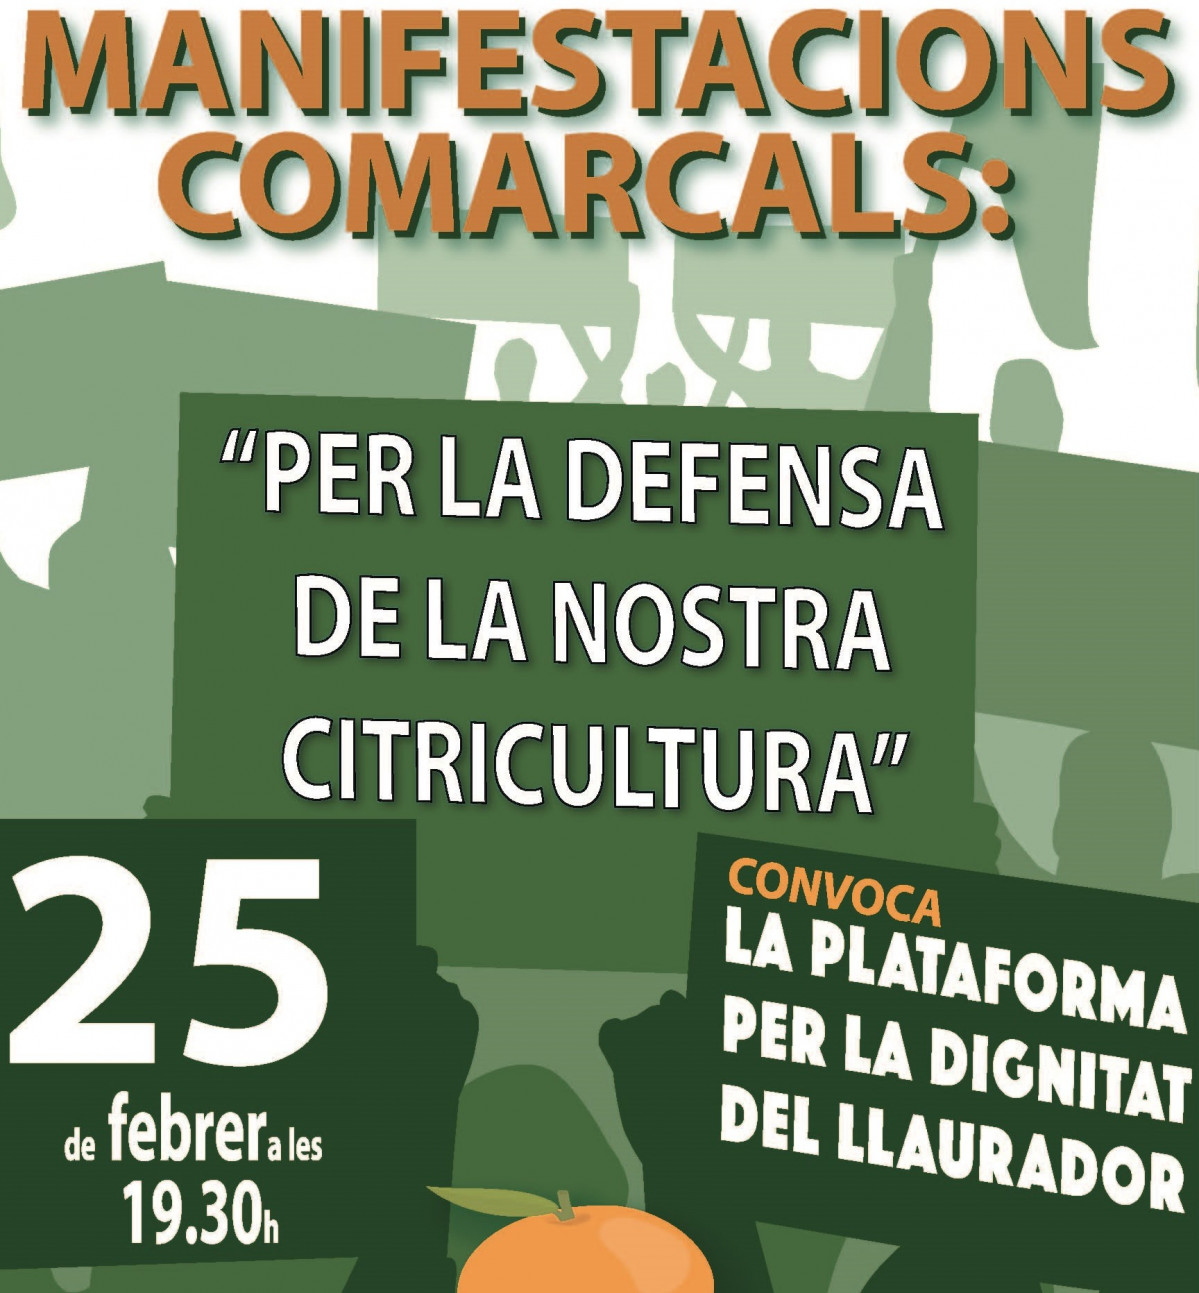 Manifestacions comarcals